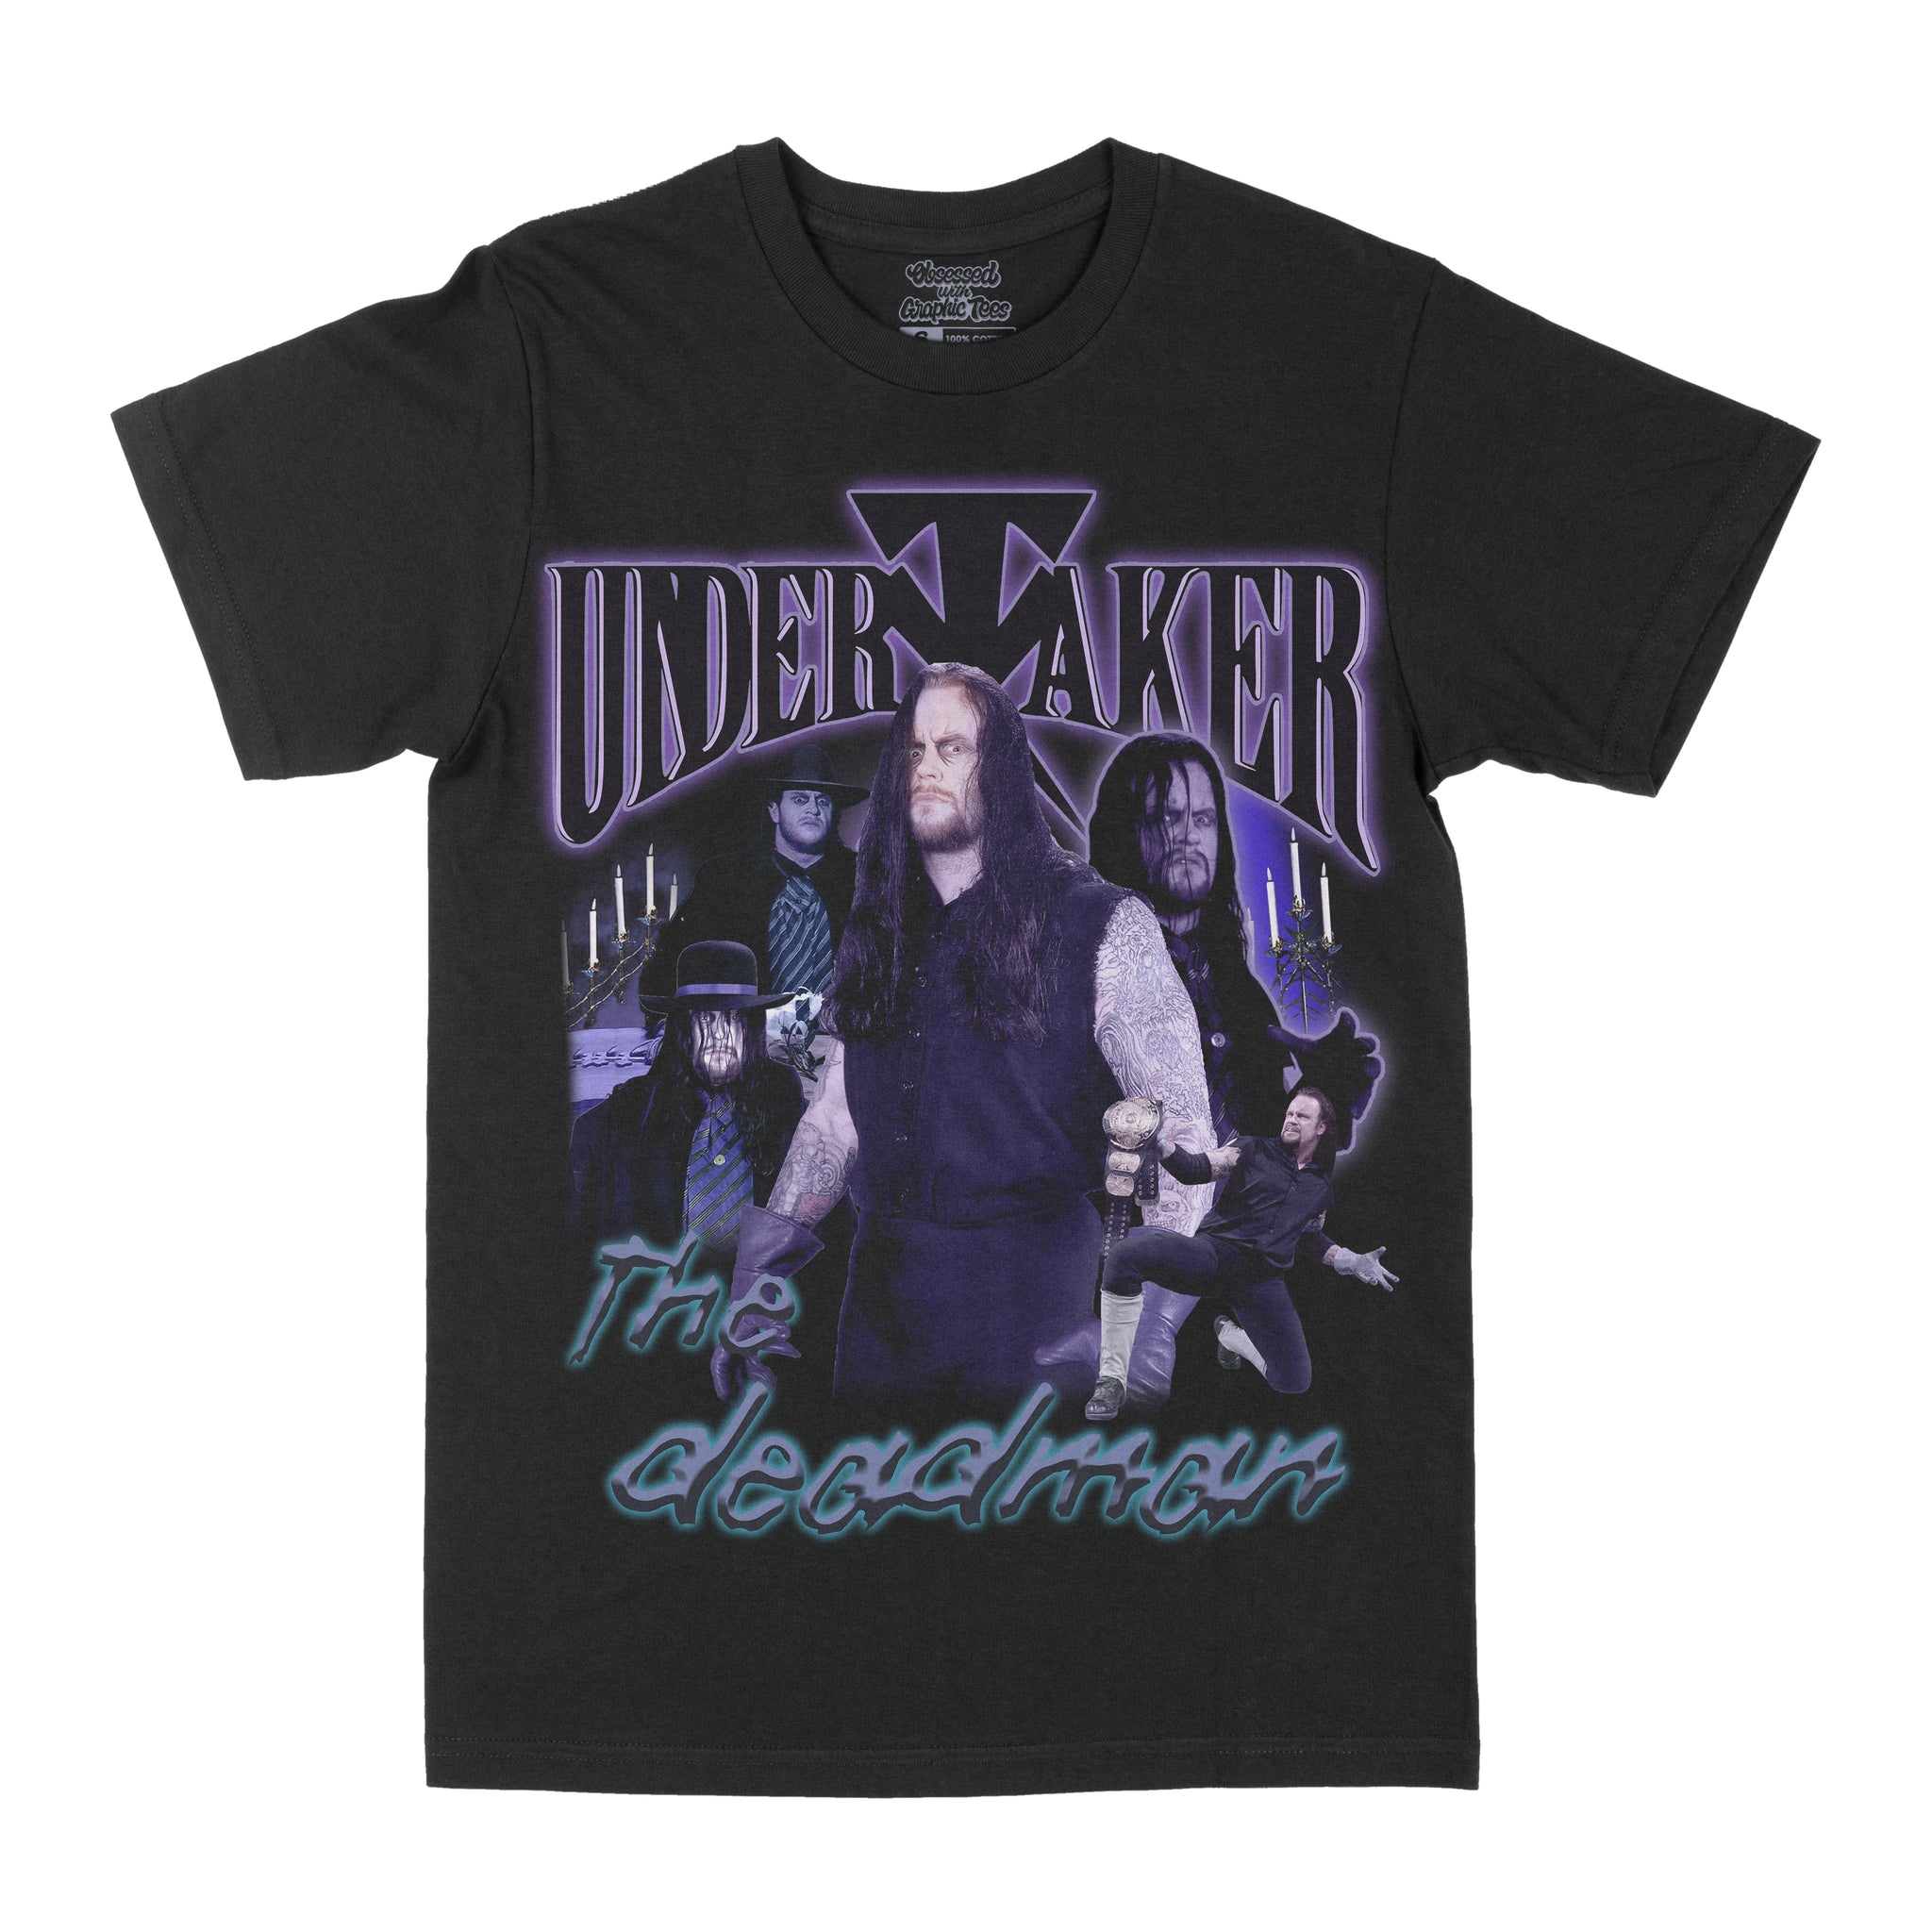 The Undertaker "Deadman" Graphic Tee